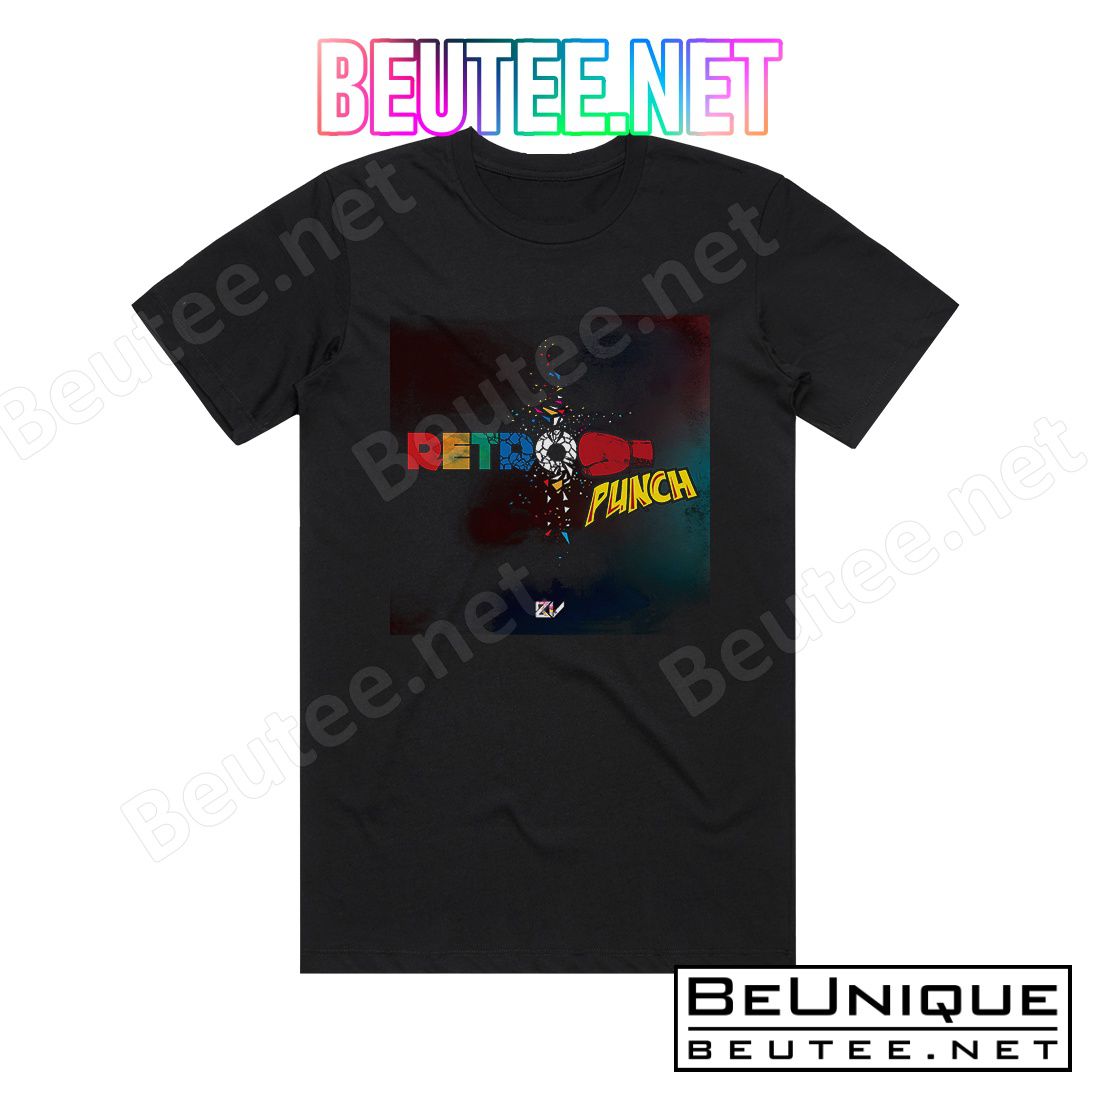 Billy Van Retro Punch Album Cover T-Shirt